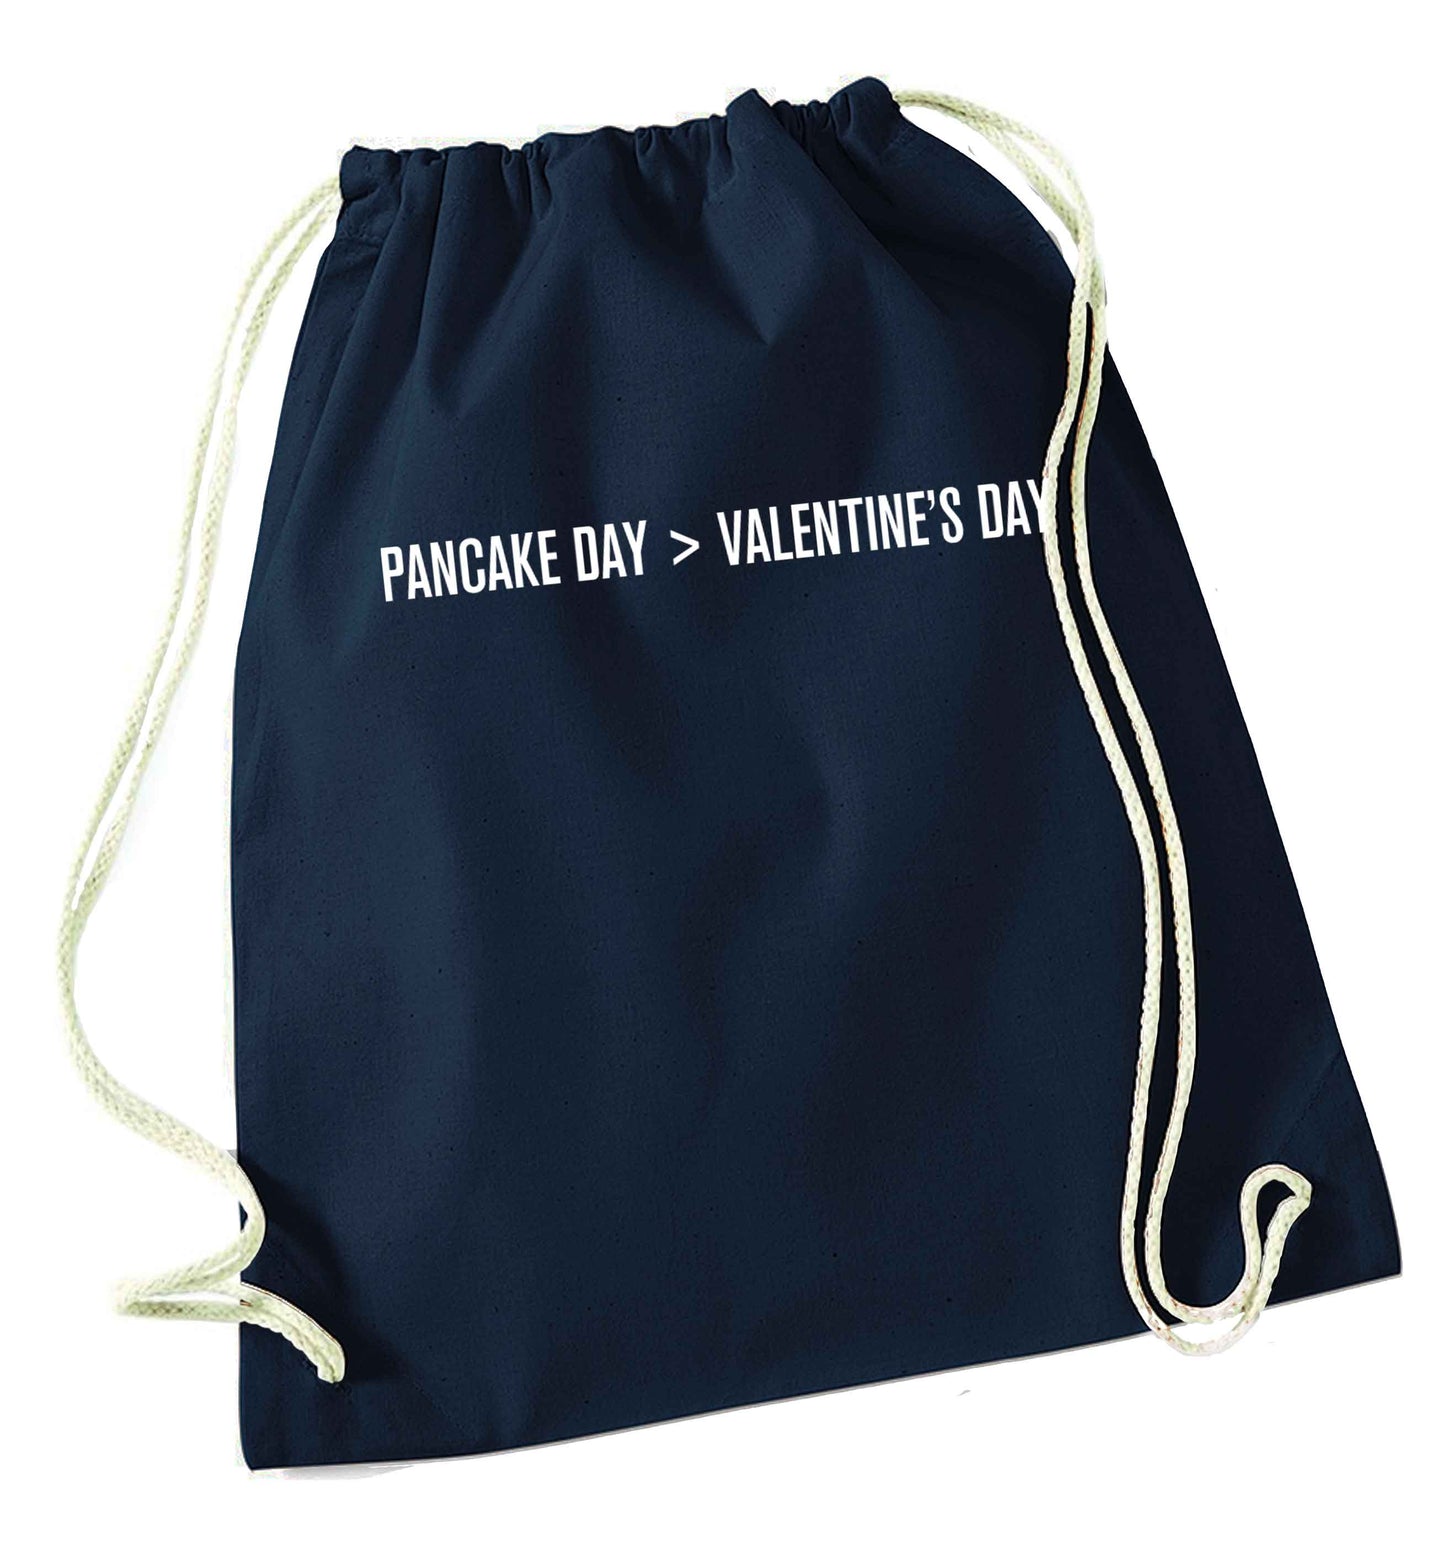 Pancake day > valentines day navy drawstring bag